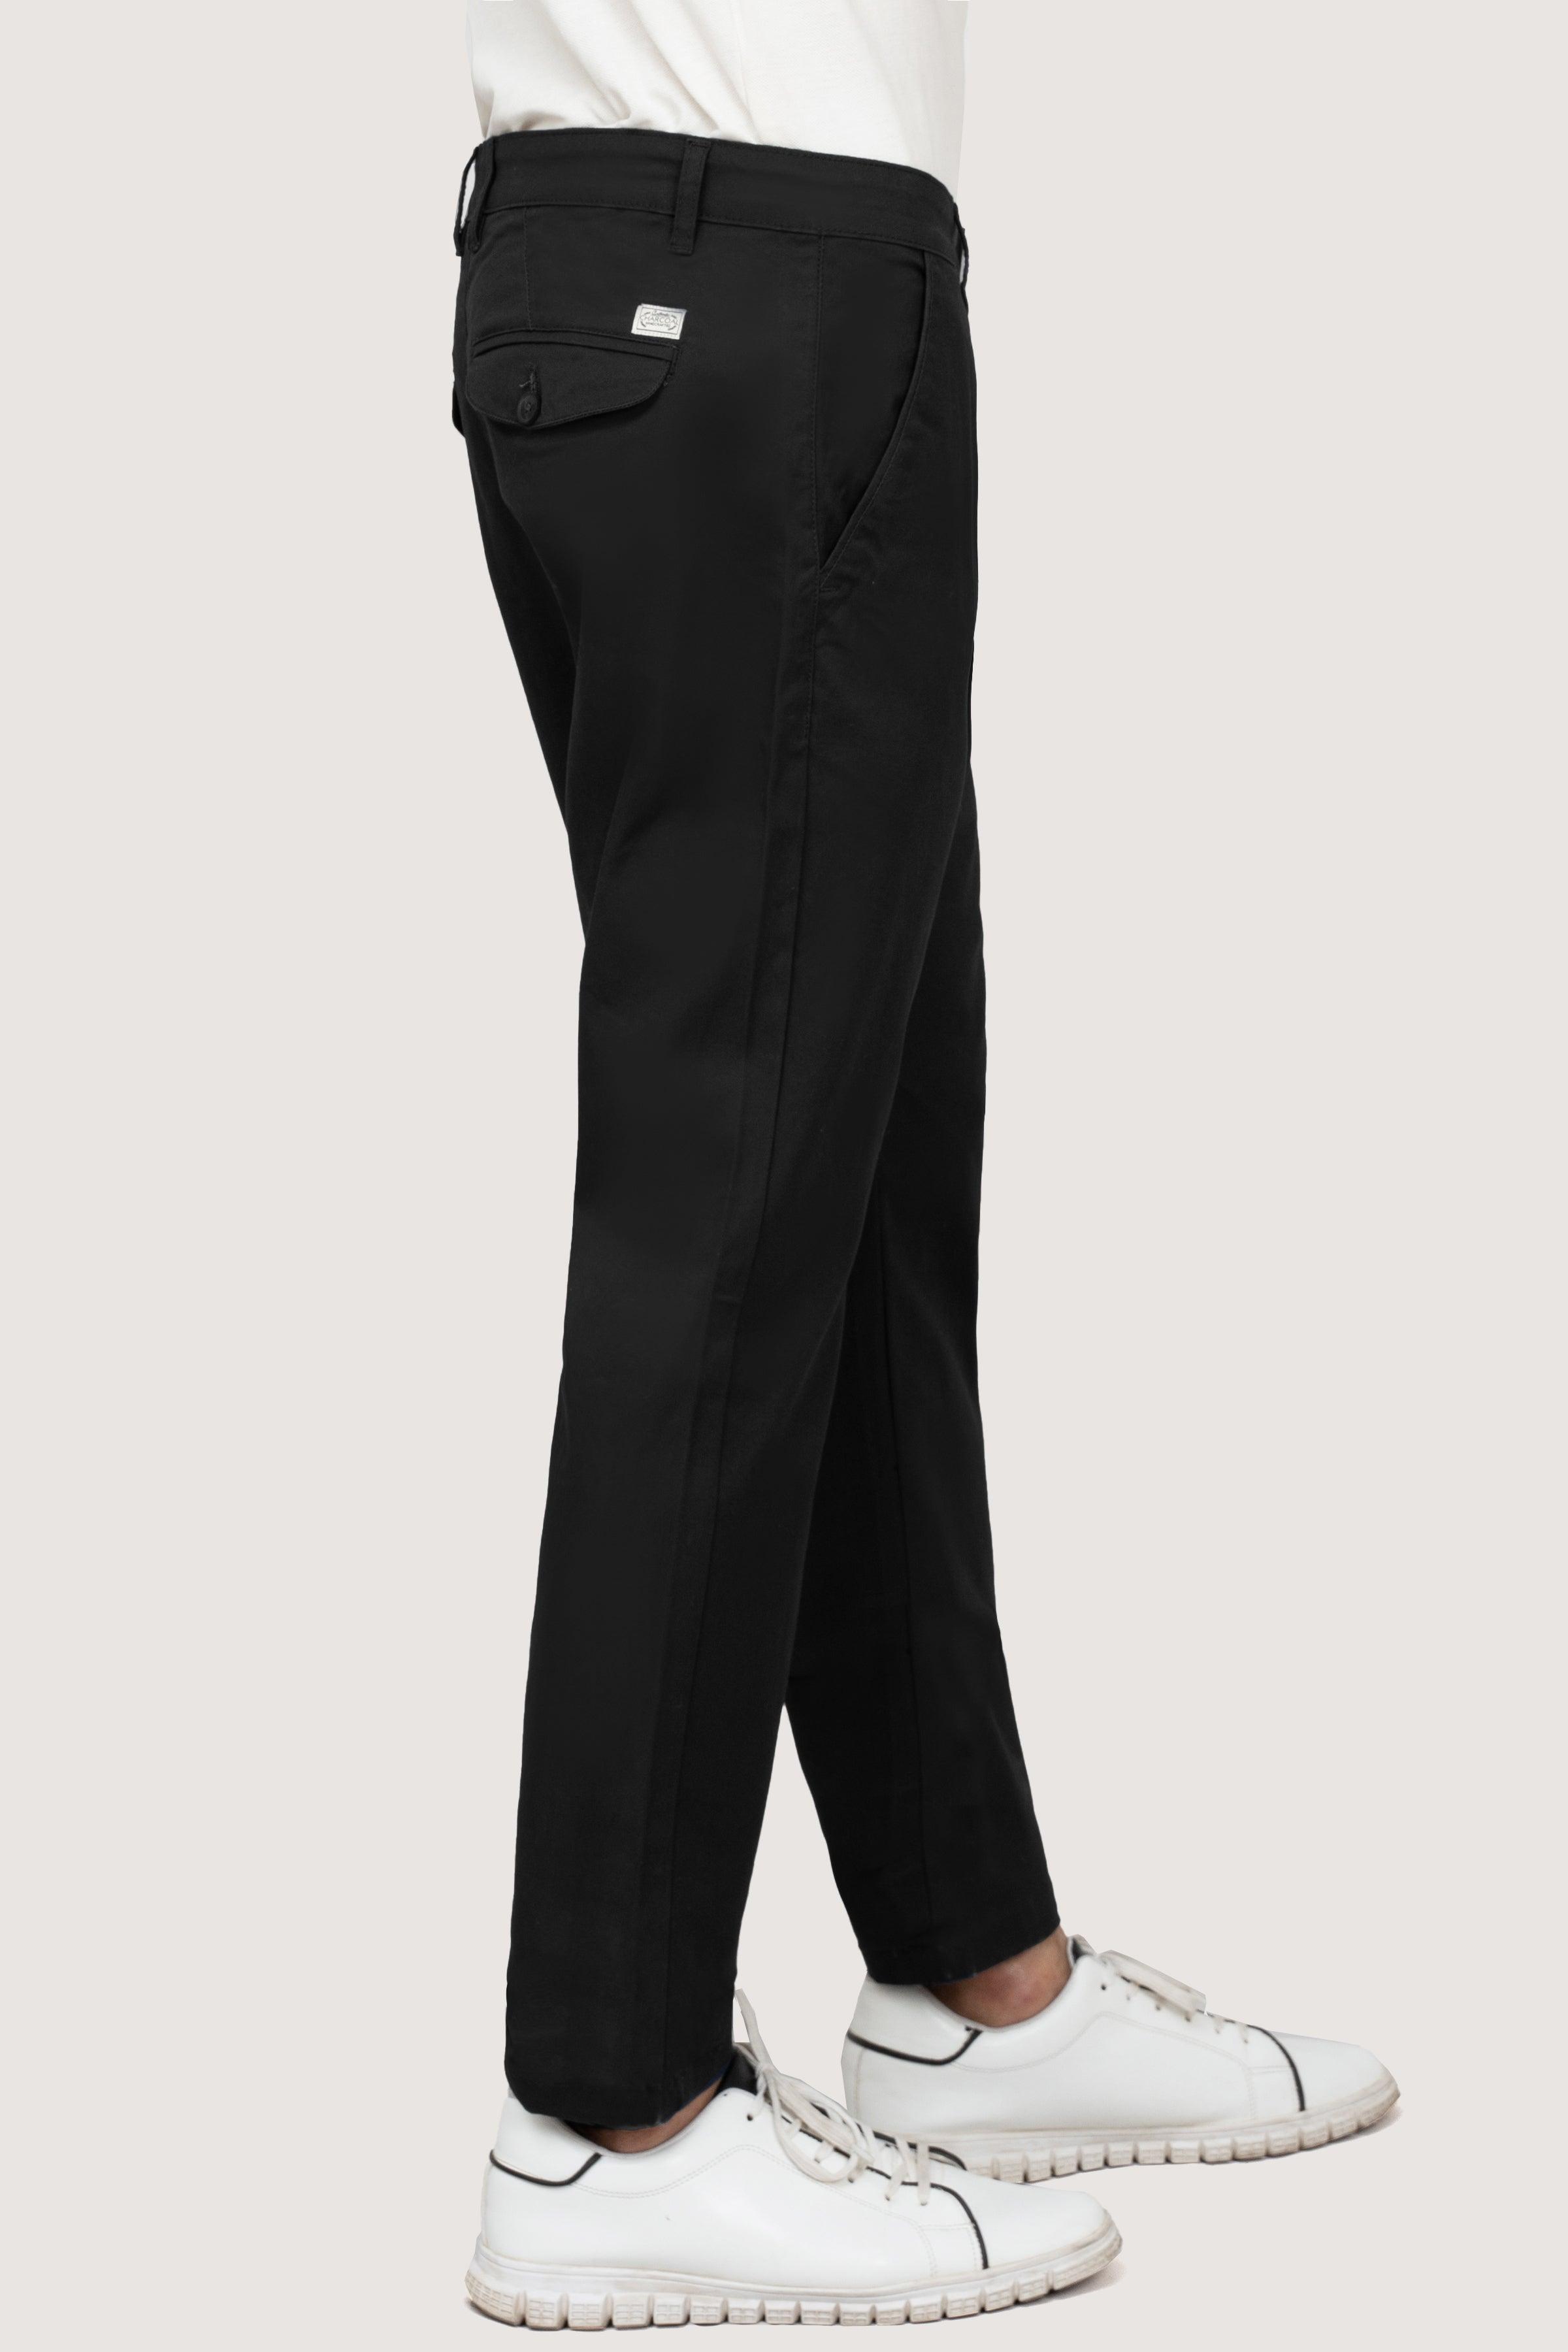 CROSS POCKET TWILL SLIMFIT BLACK PANT at Charcoal Clothing